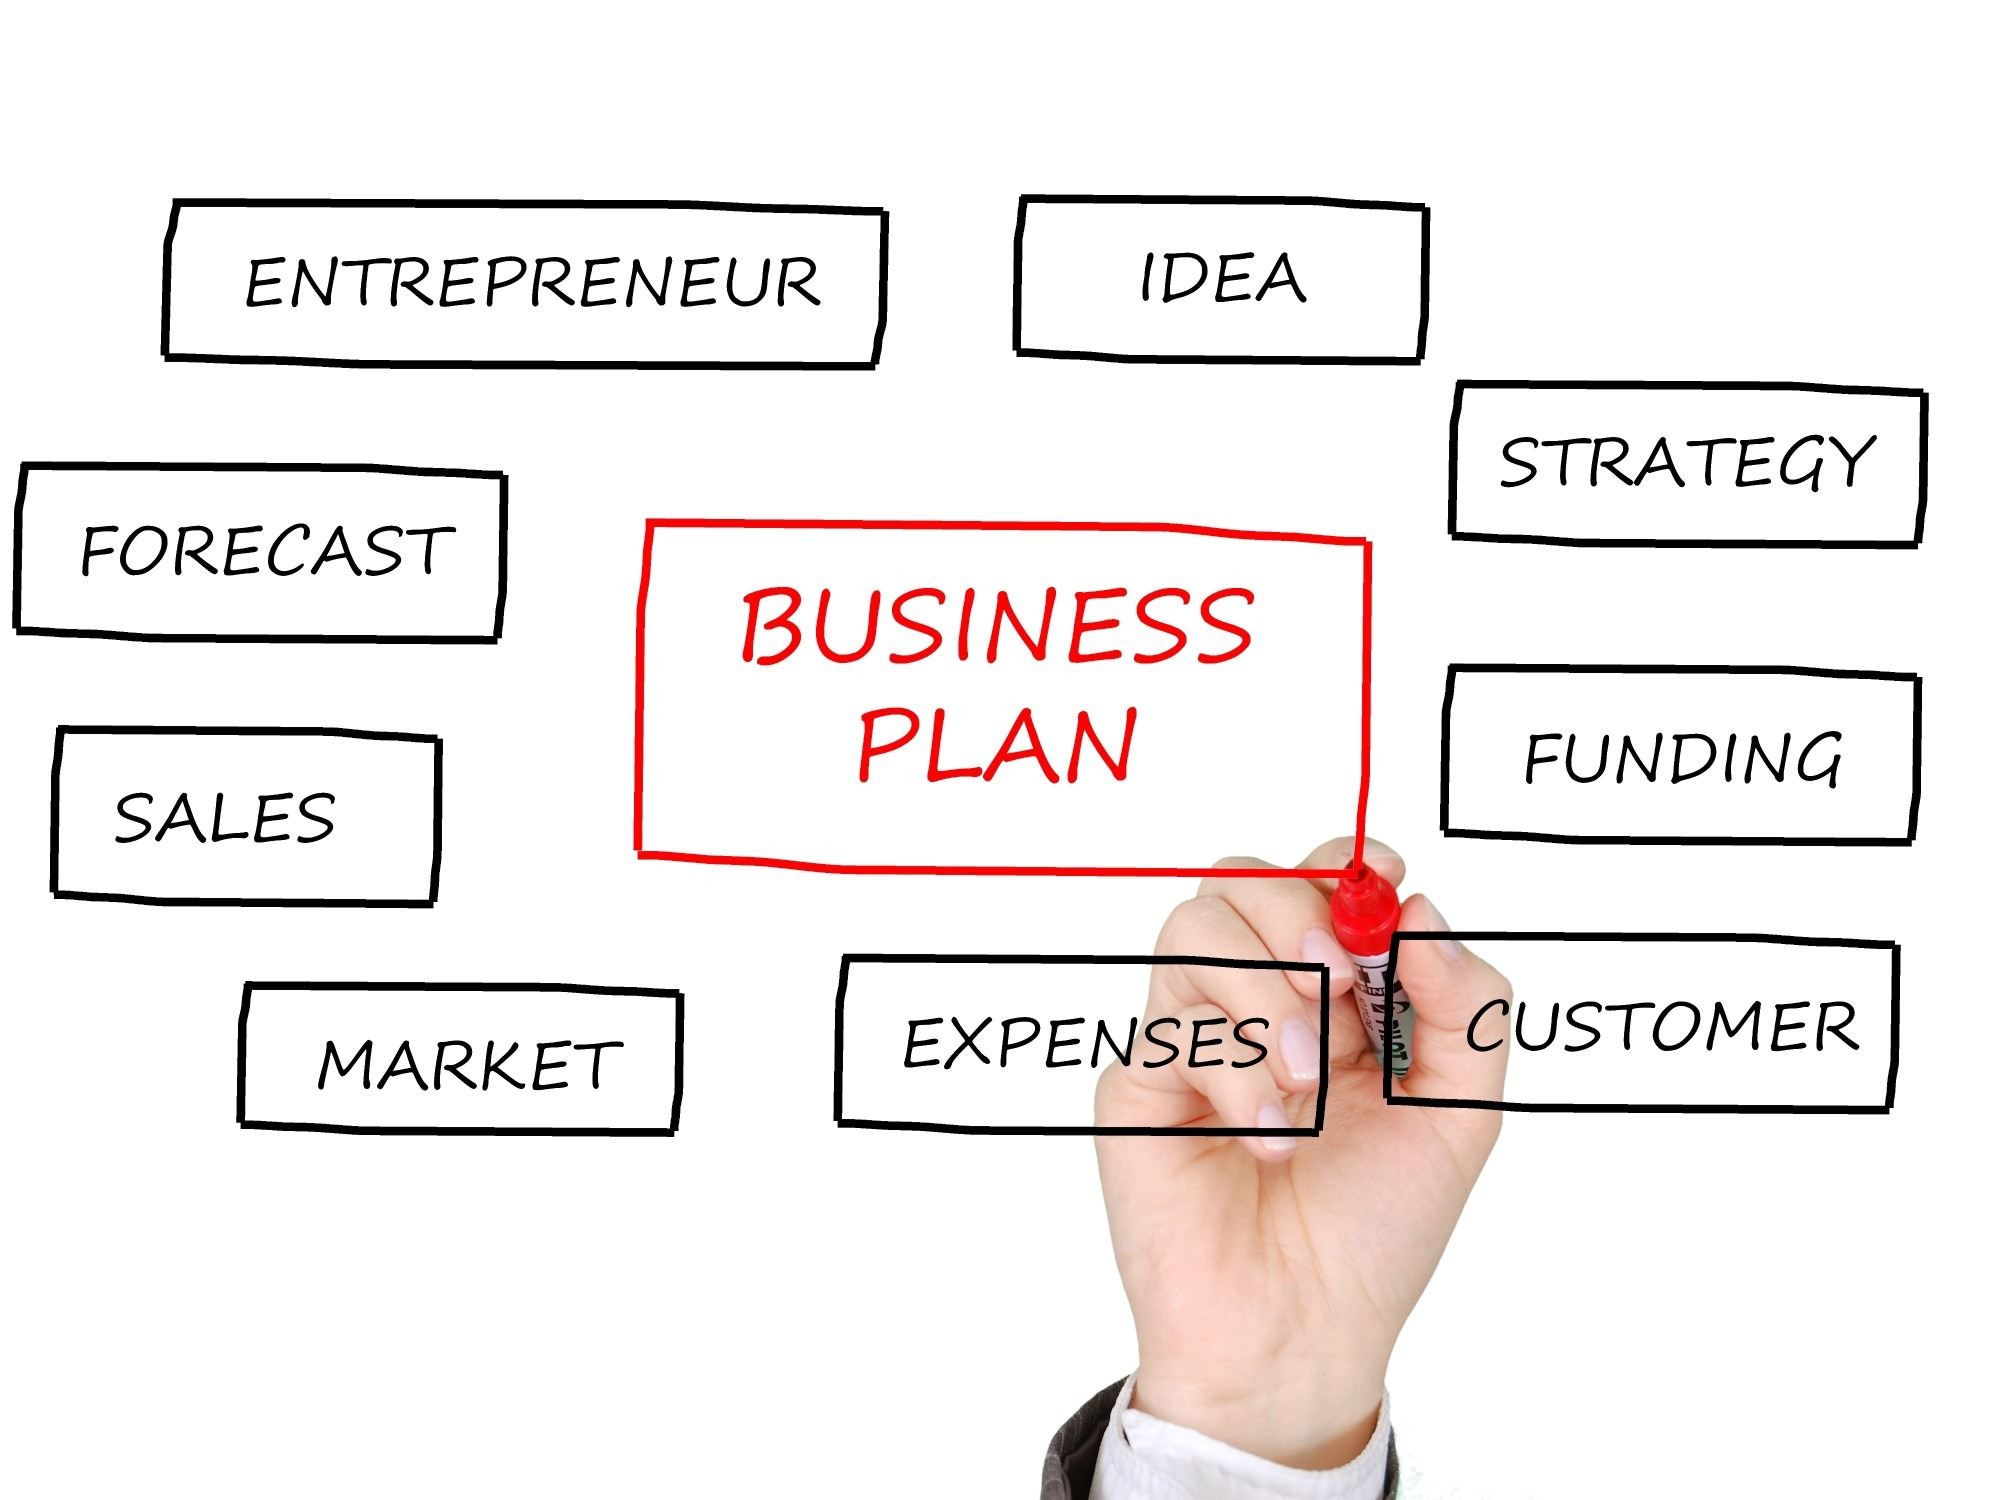 writing a business plan 101